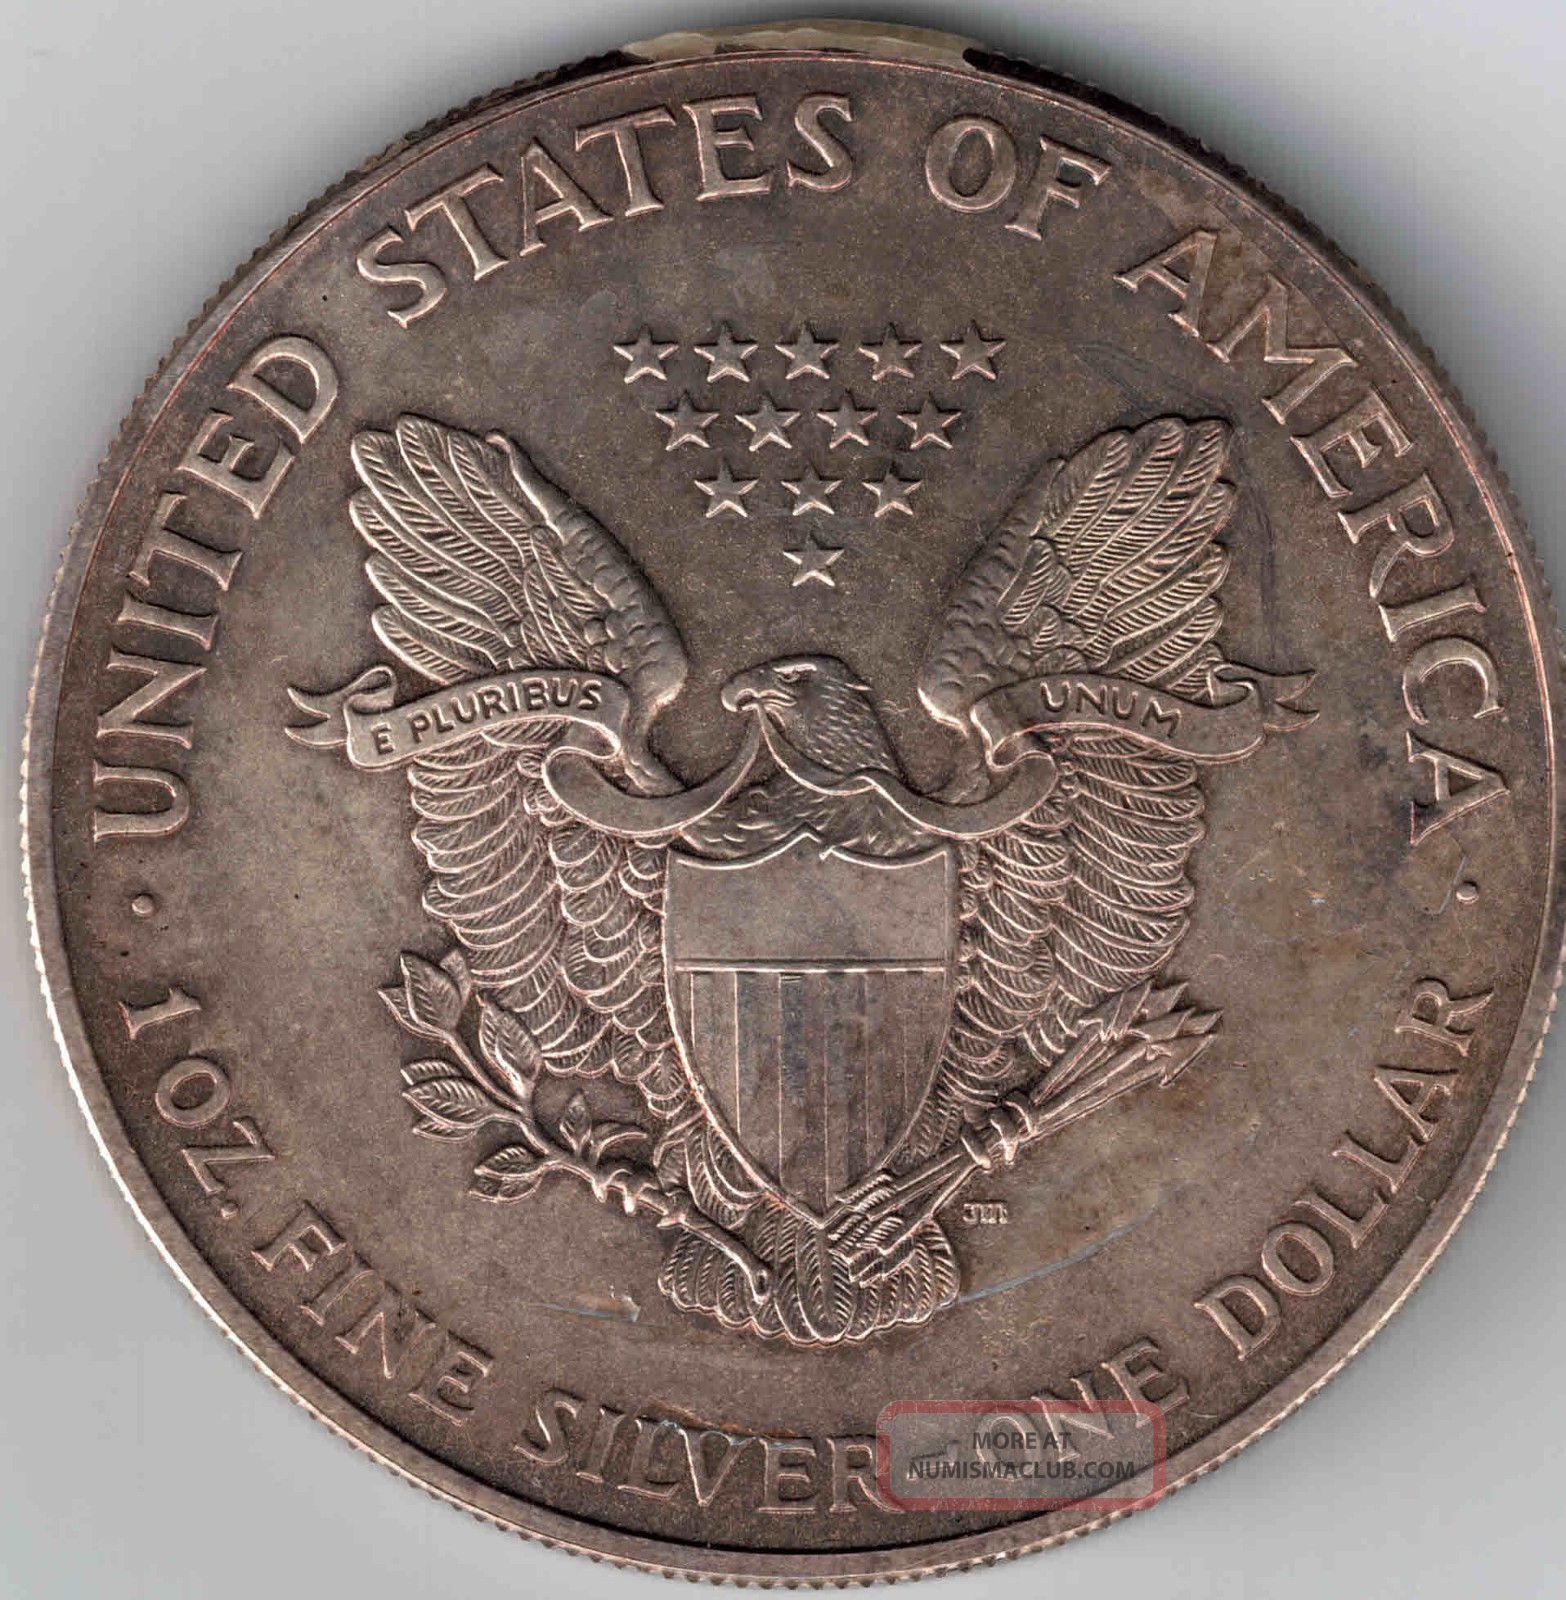 U. S. 1999 1 Ounce. 999 Fine Silver Eagle / Liberty Bullion Coin